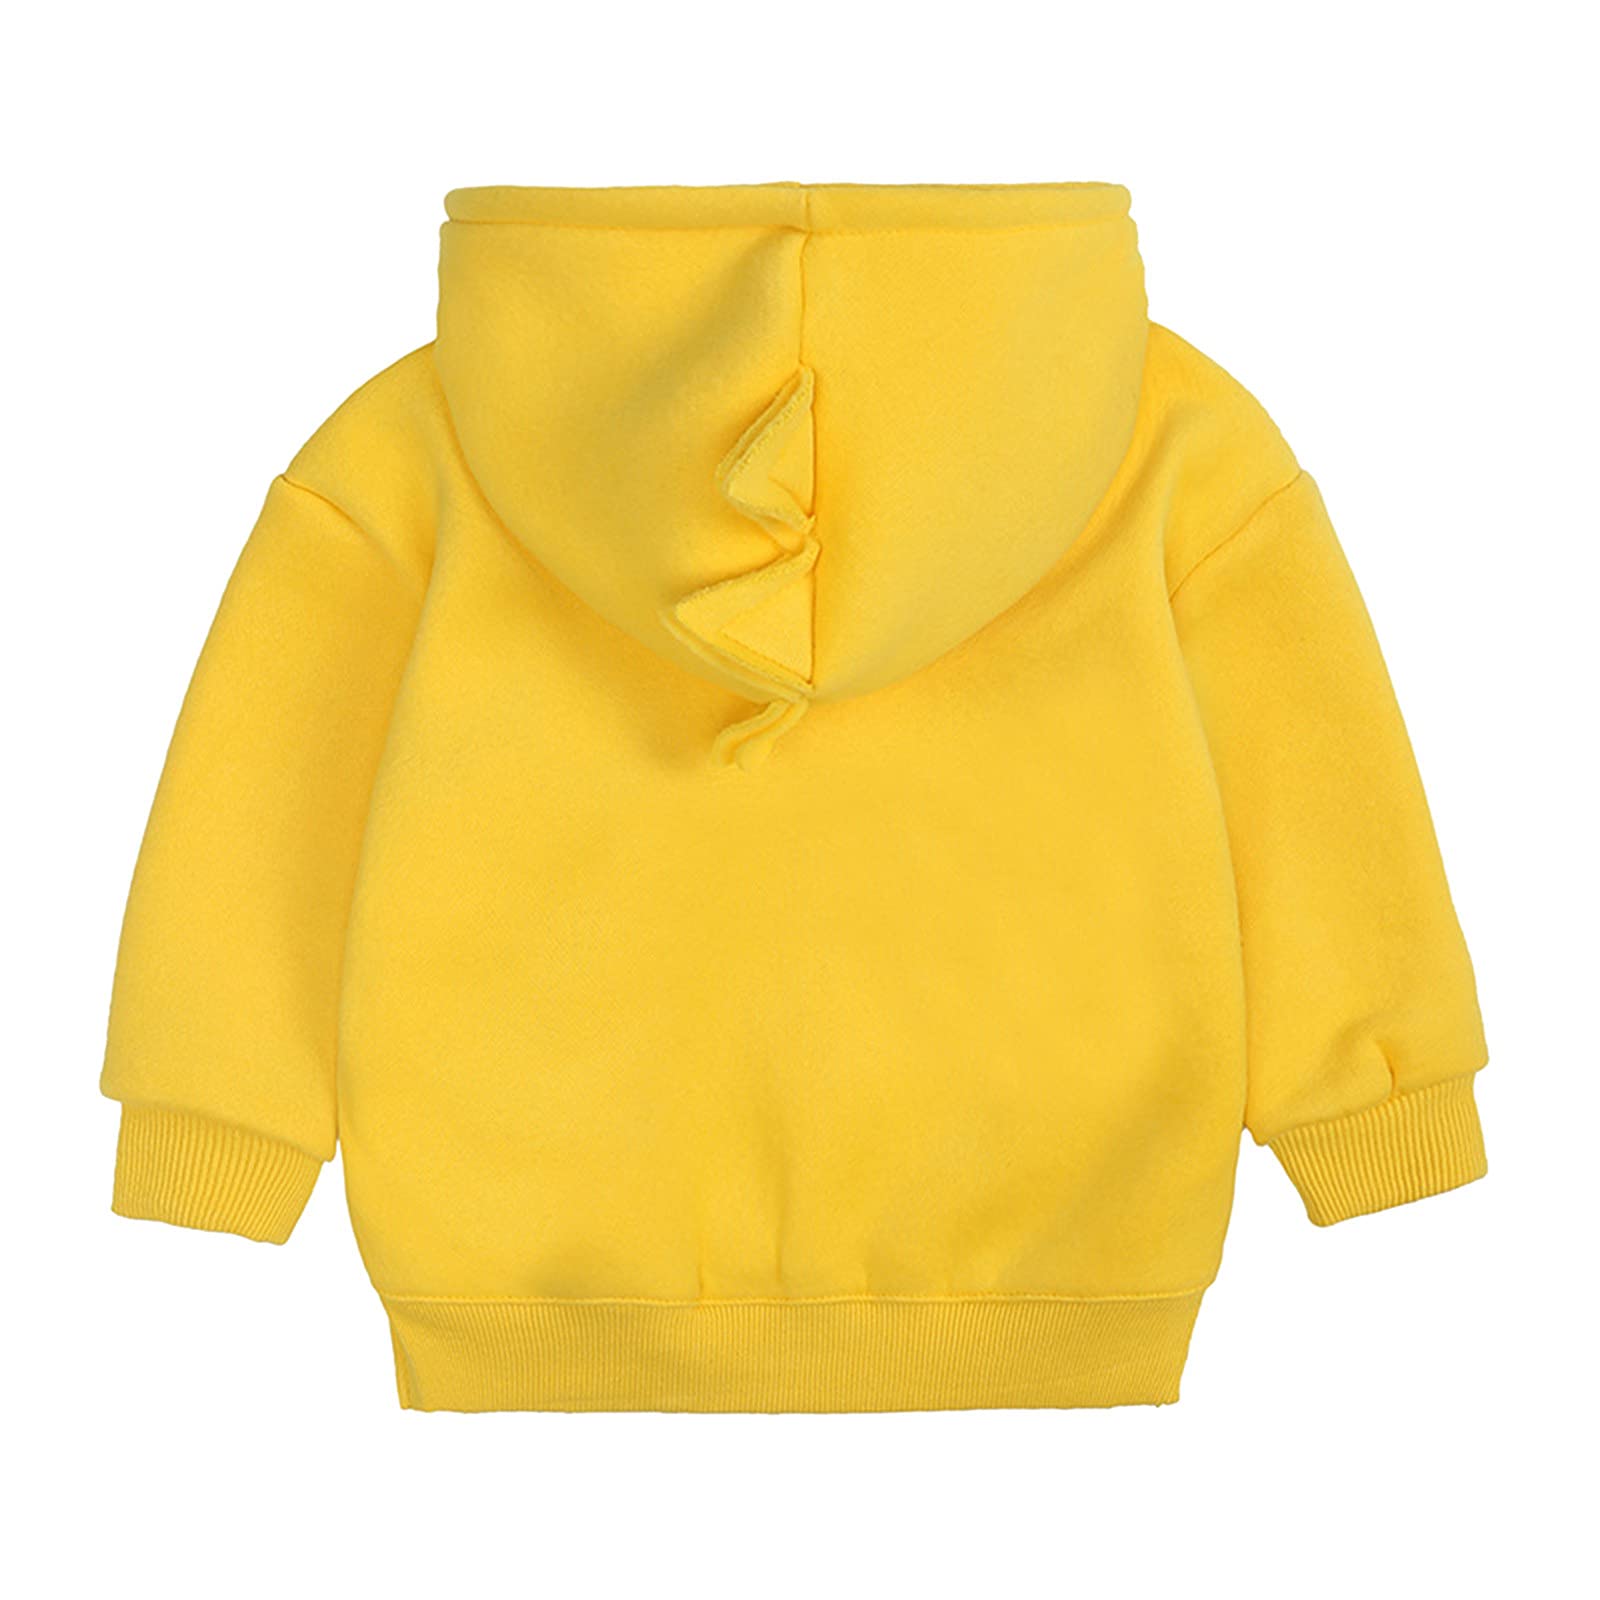 NSQFKALL Splice Dinosaur Fleece Hoodie for Toddler Baby Girls Boys Hem Slit Sweatshirt Sweaters Top